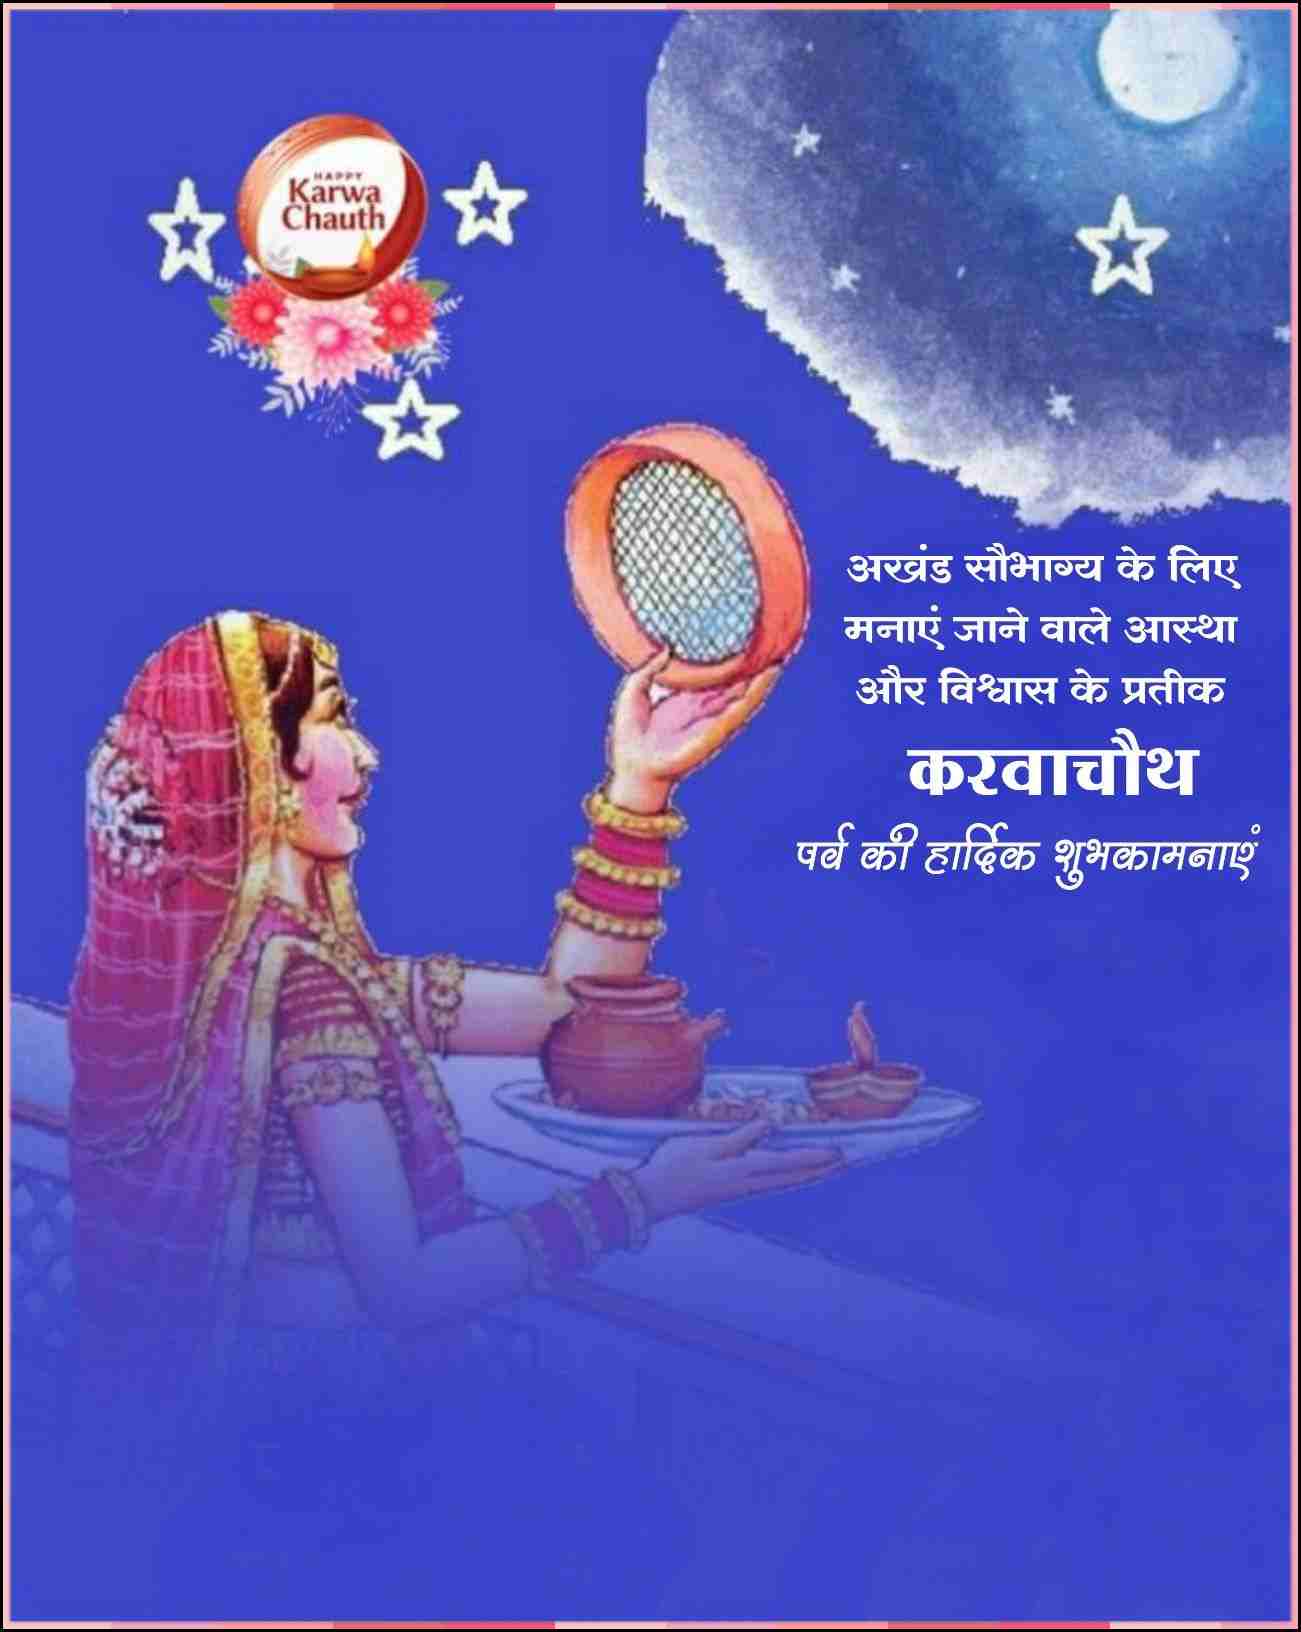 karwa chauth images in hindi
